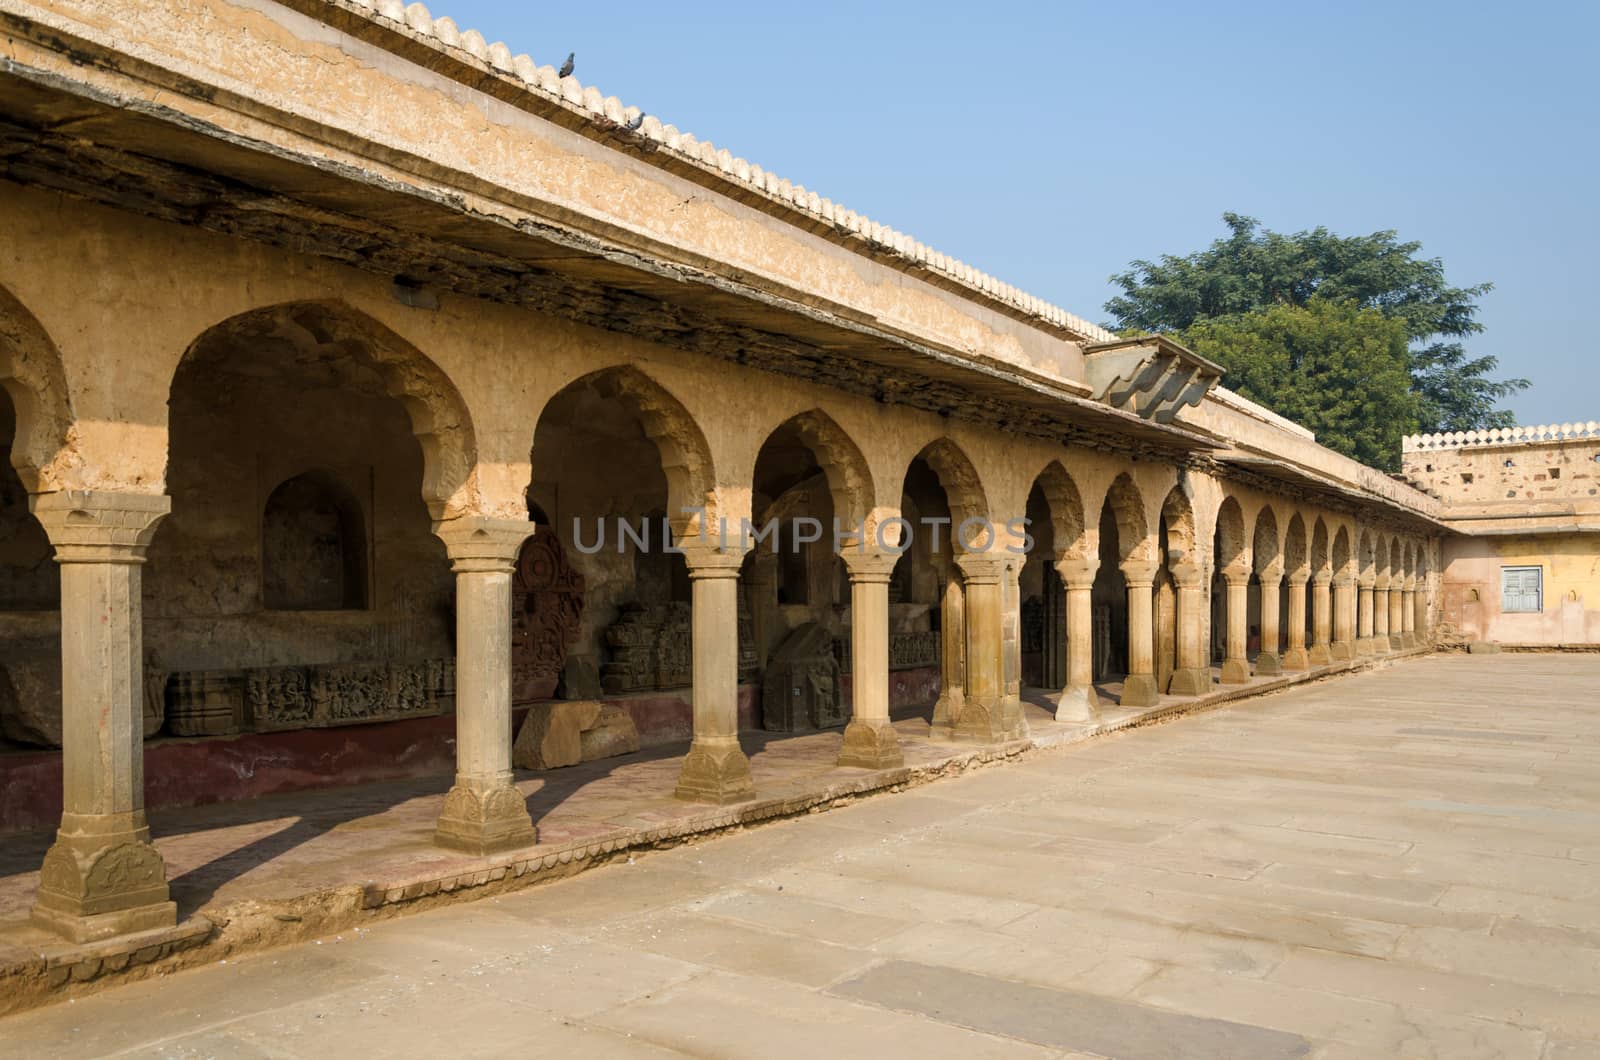 Arcade of Chand Baori Stepwell in Jaipur, Rajasthan, India. 